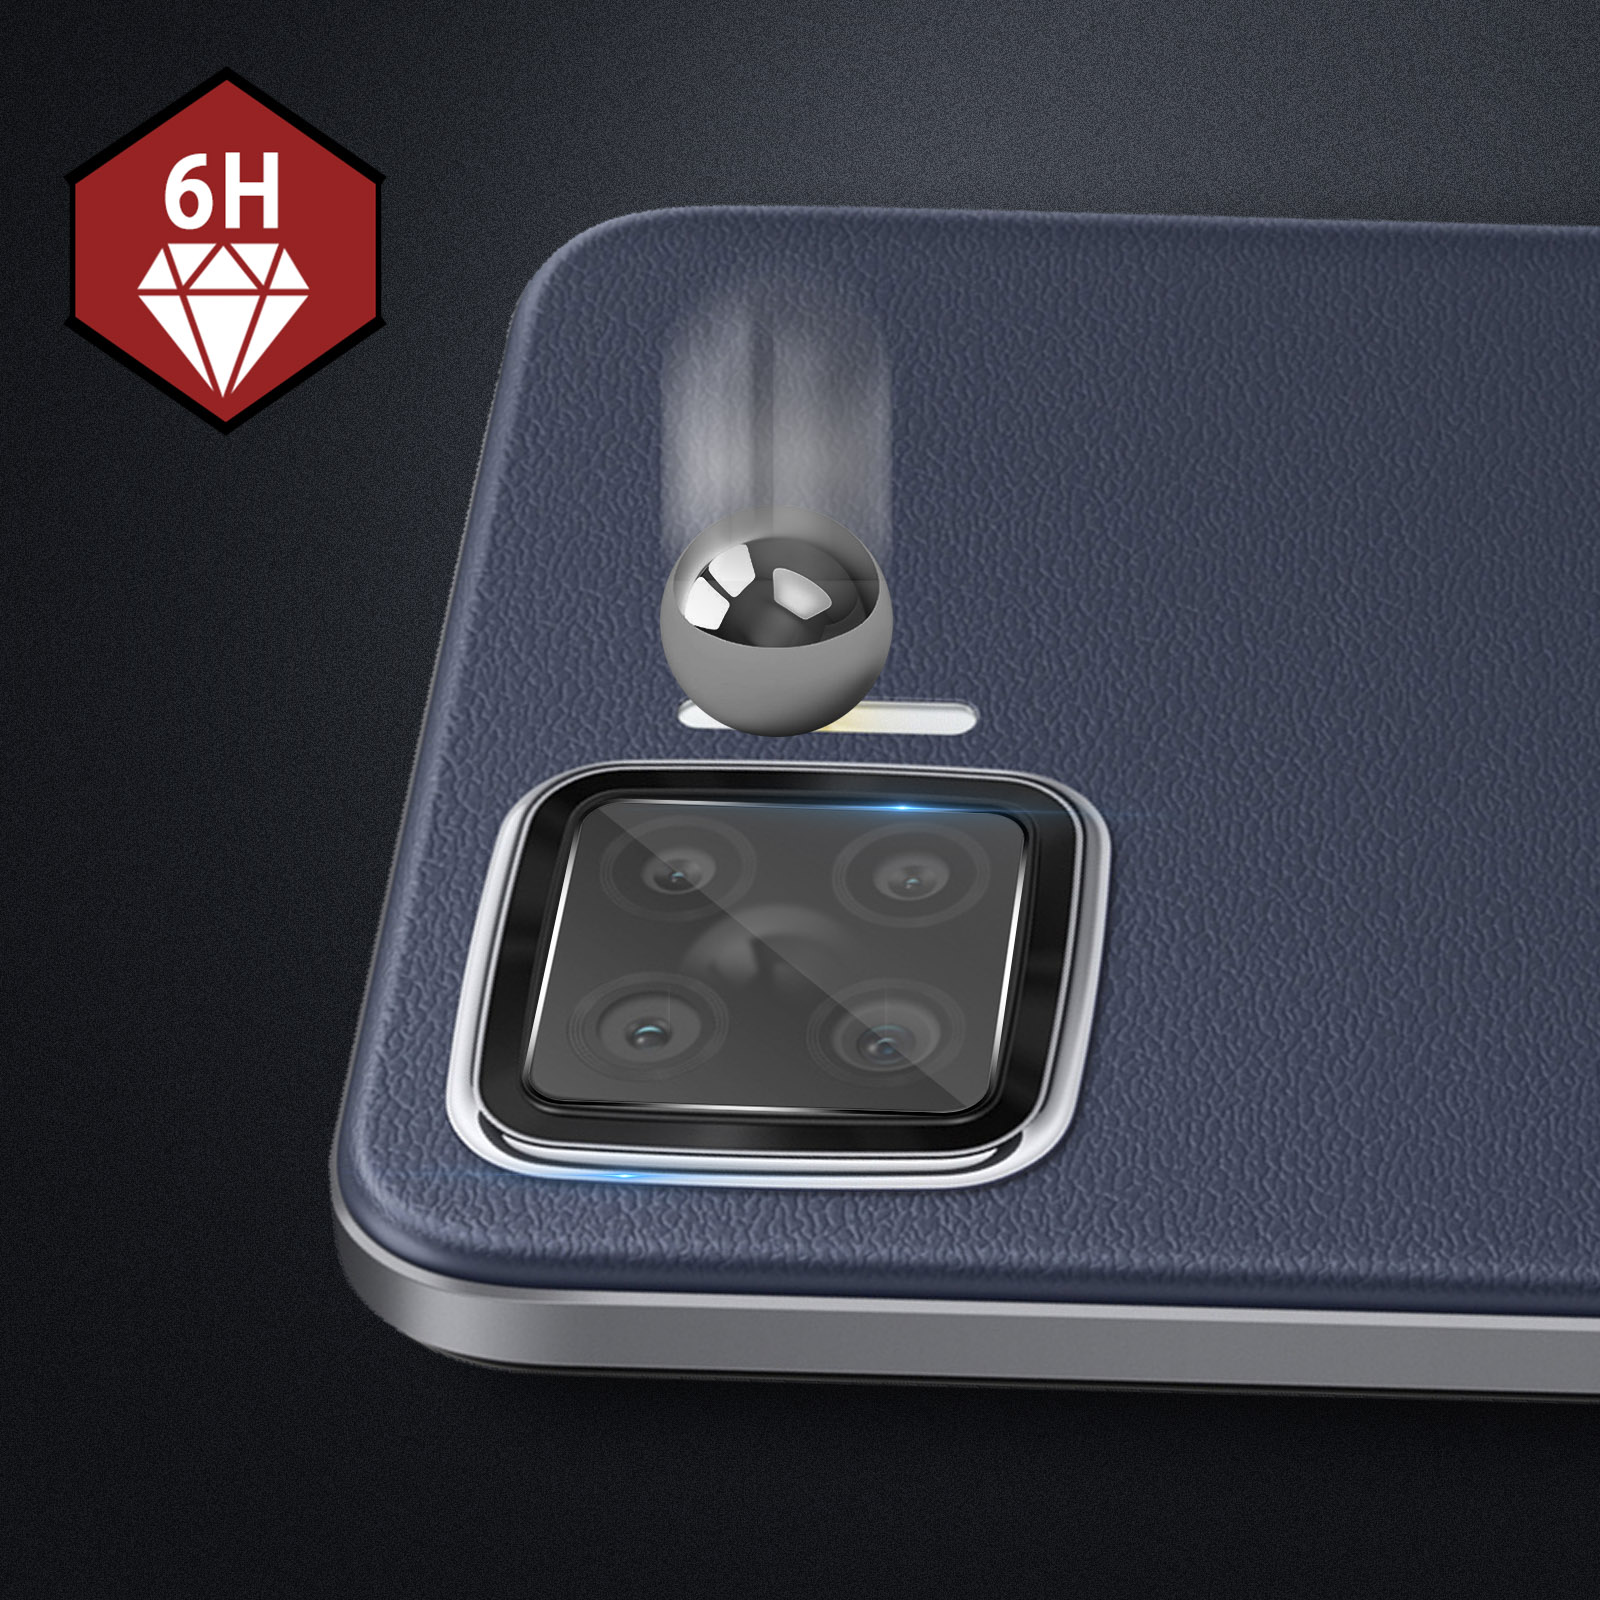 3MK Oppo Folie(für Lens 3mk Protection A73) A73 - Oppo Oppo